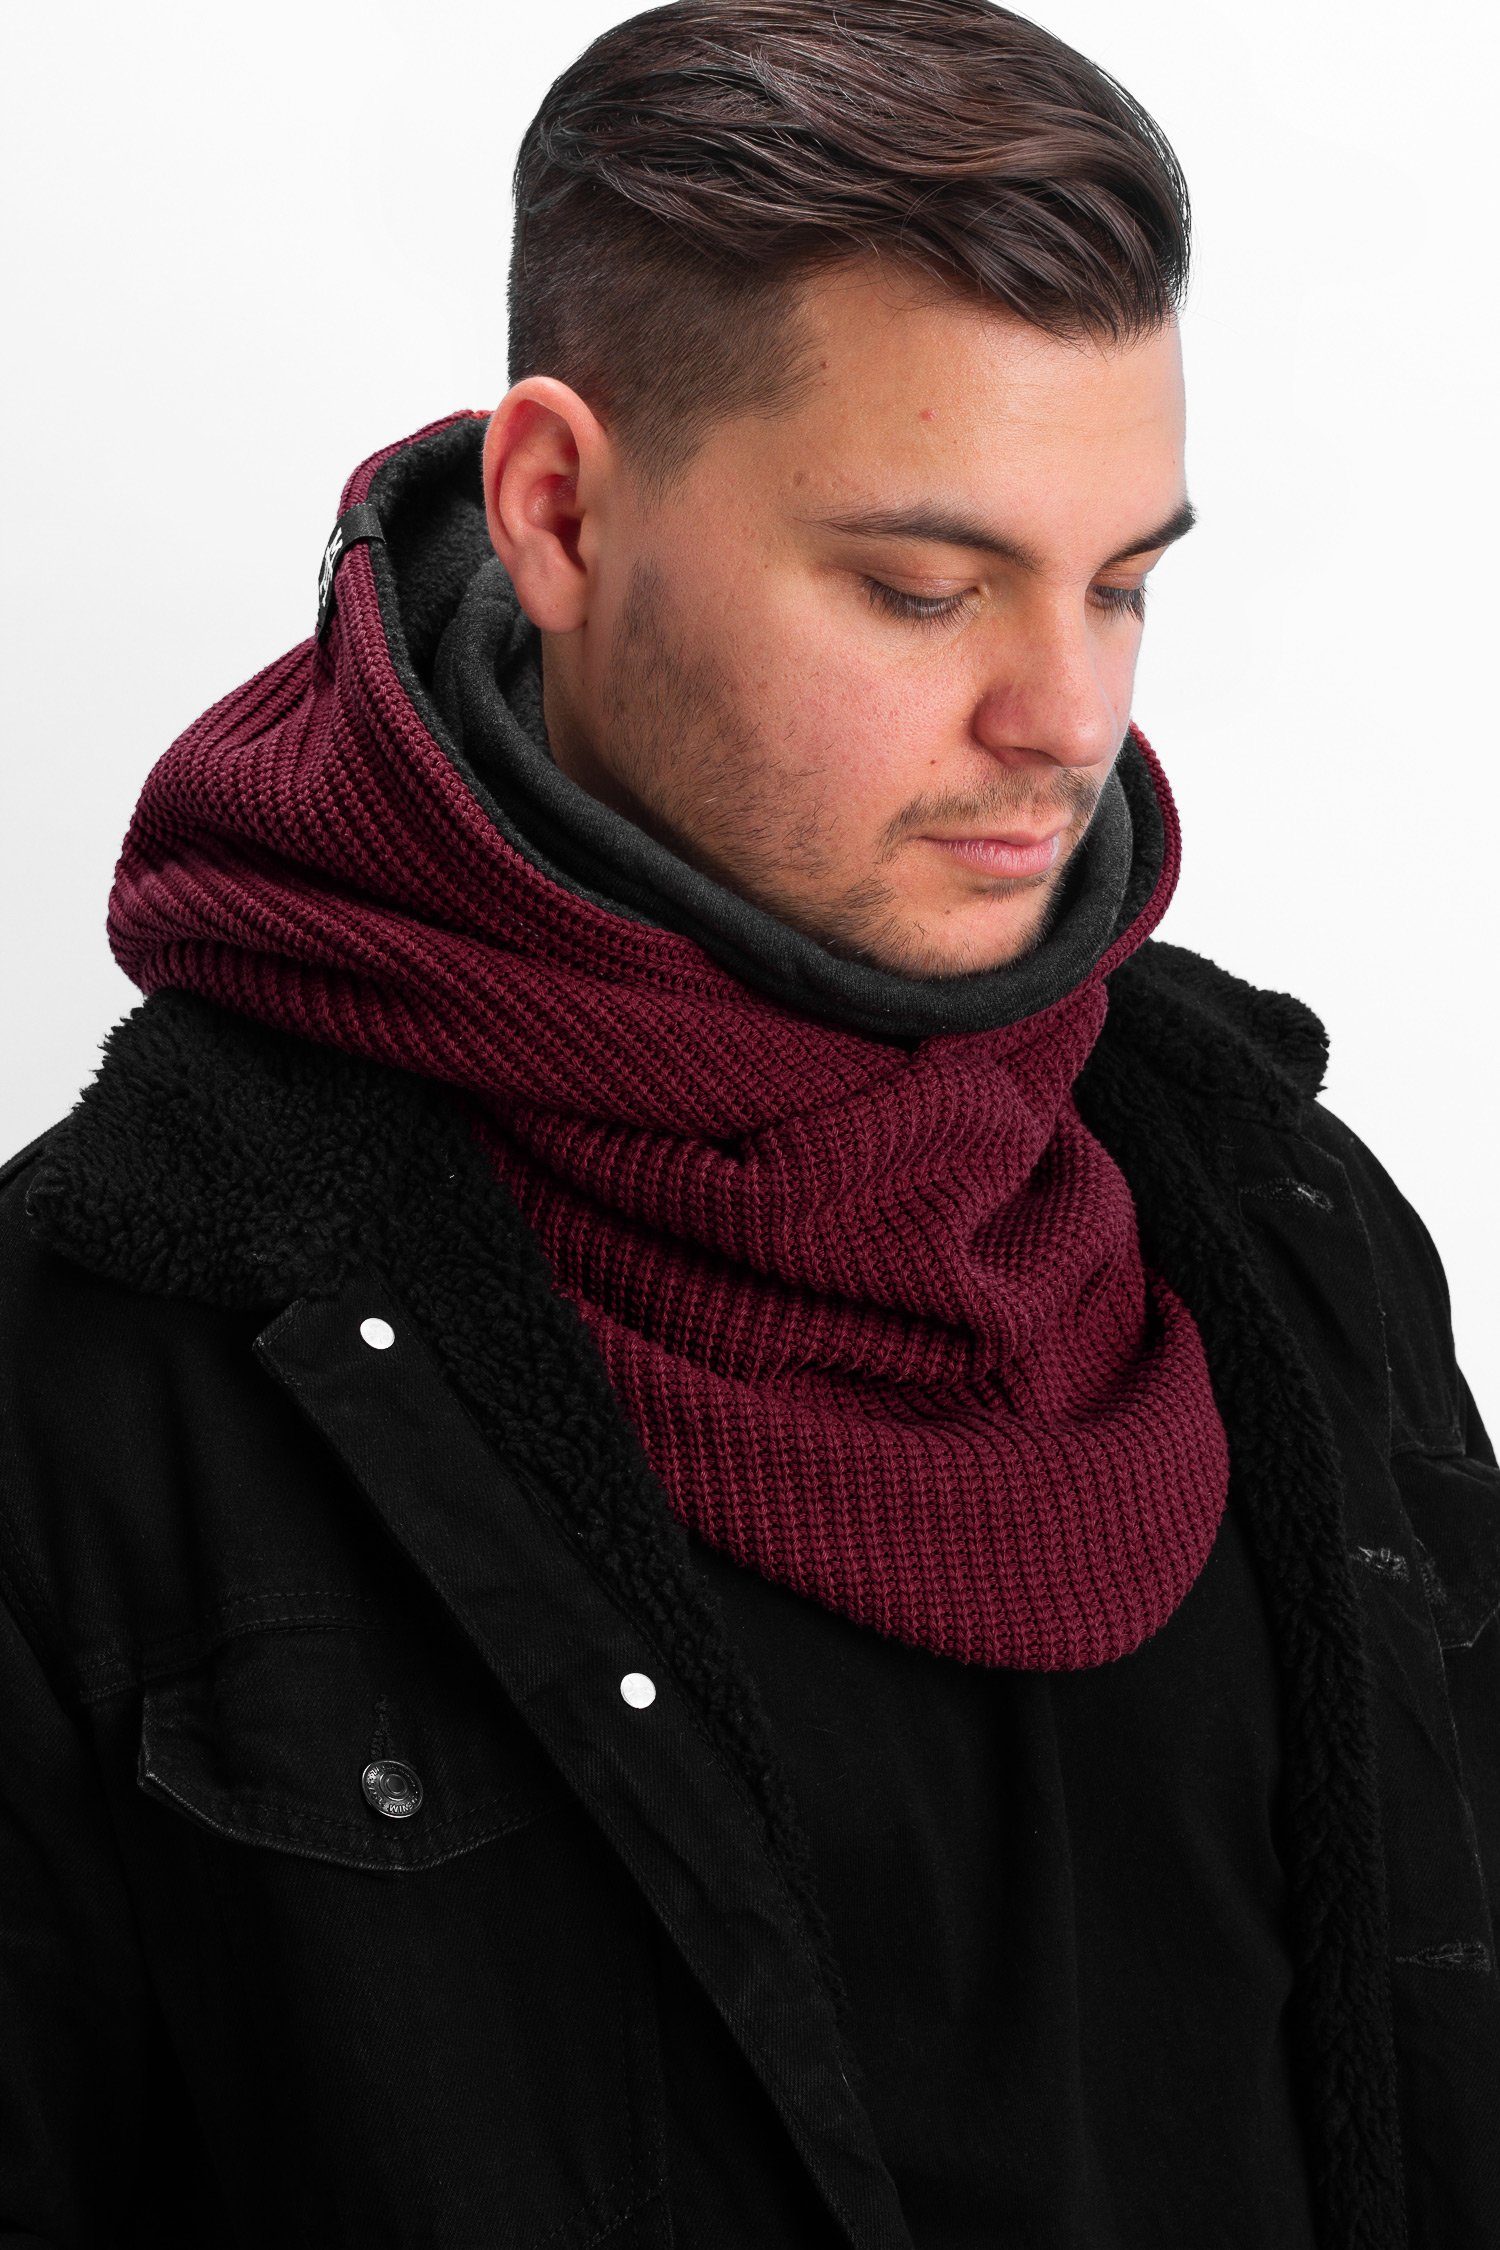 Strickschal, Windbreaker Knit integriertem Schal, Modeschal Manufaktur13 Bordeaux mit Kapuzenschal, Hooded Loop -